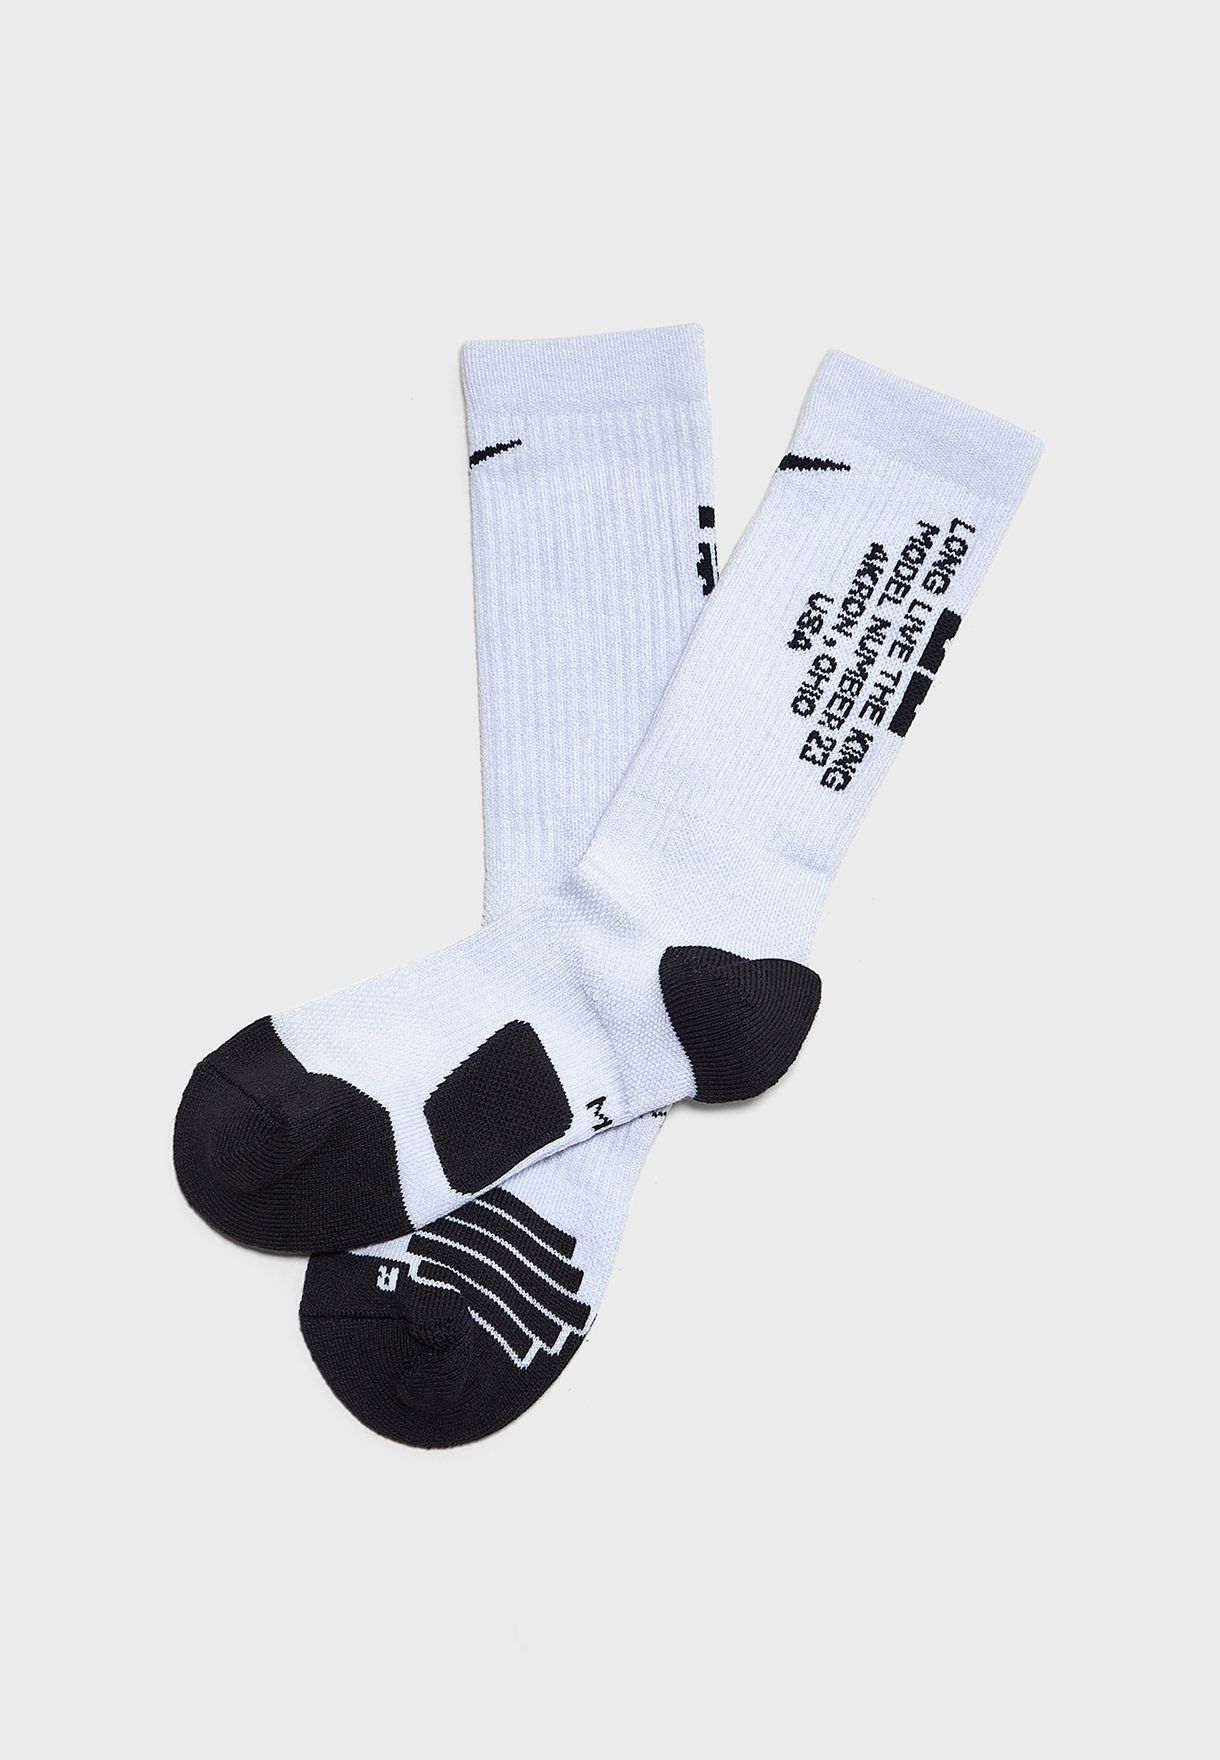 lebron james socks for kids